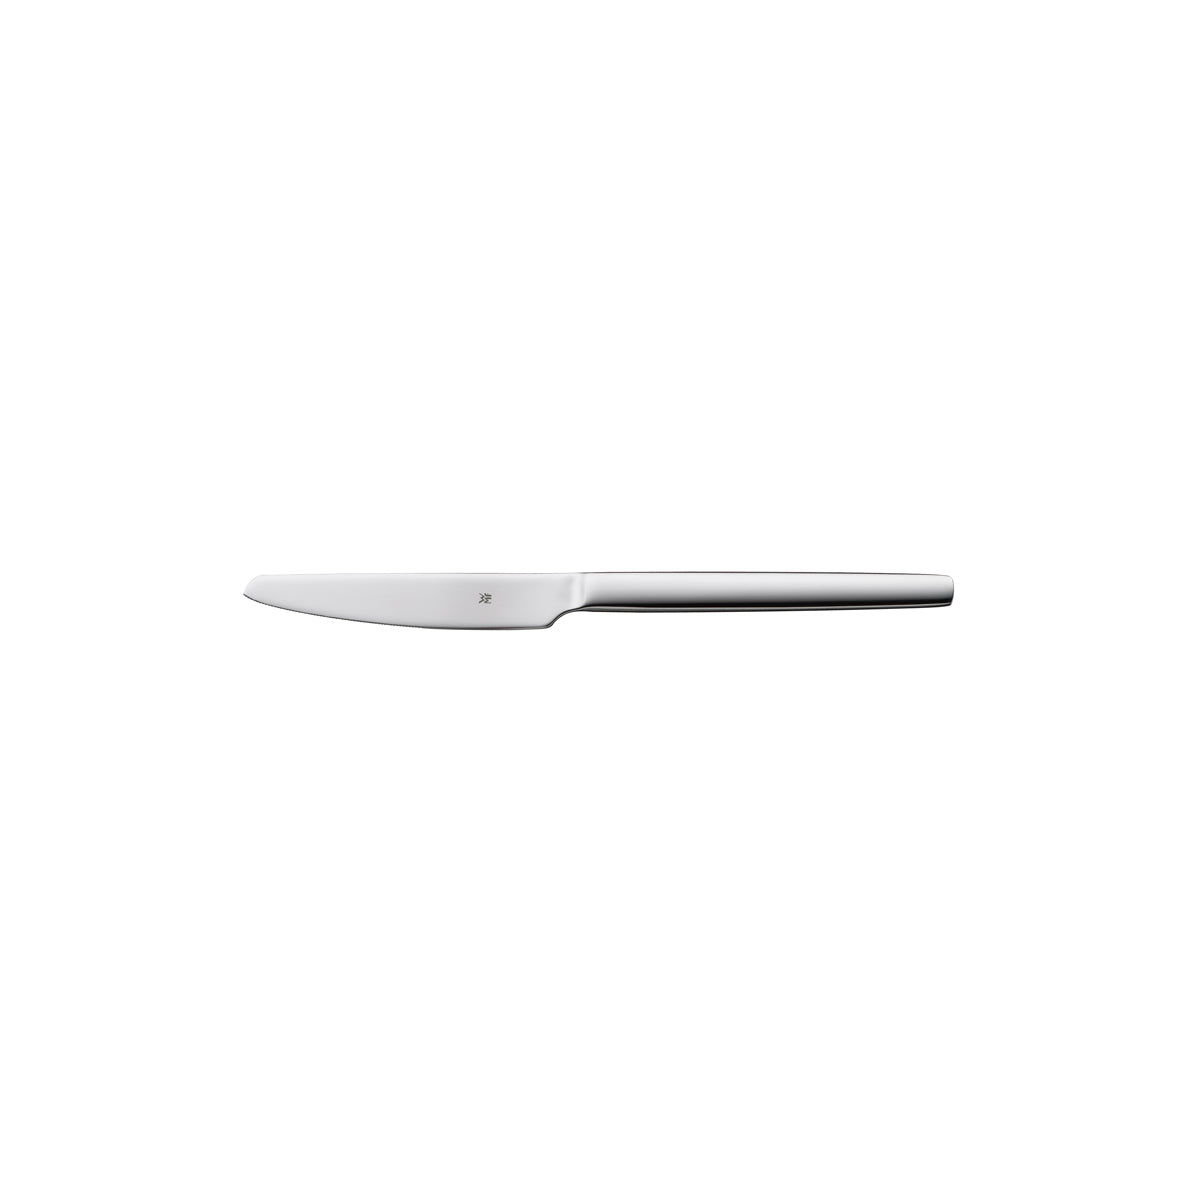 54.8003.6049 WMF Sofia Table Knife Stainless Steel Tomkin Australia Hospitality Supplies